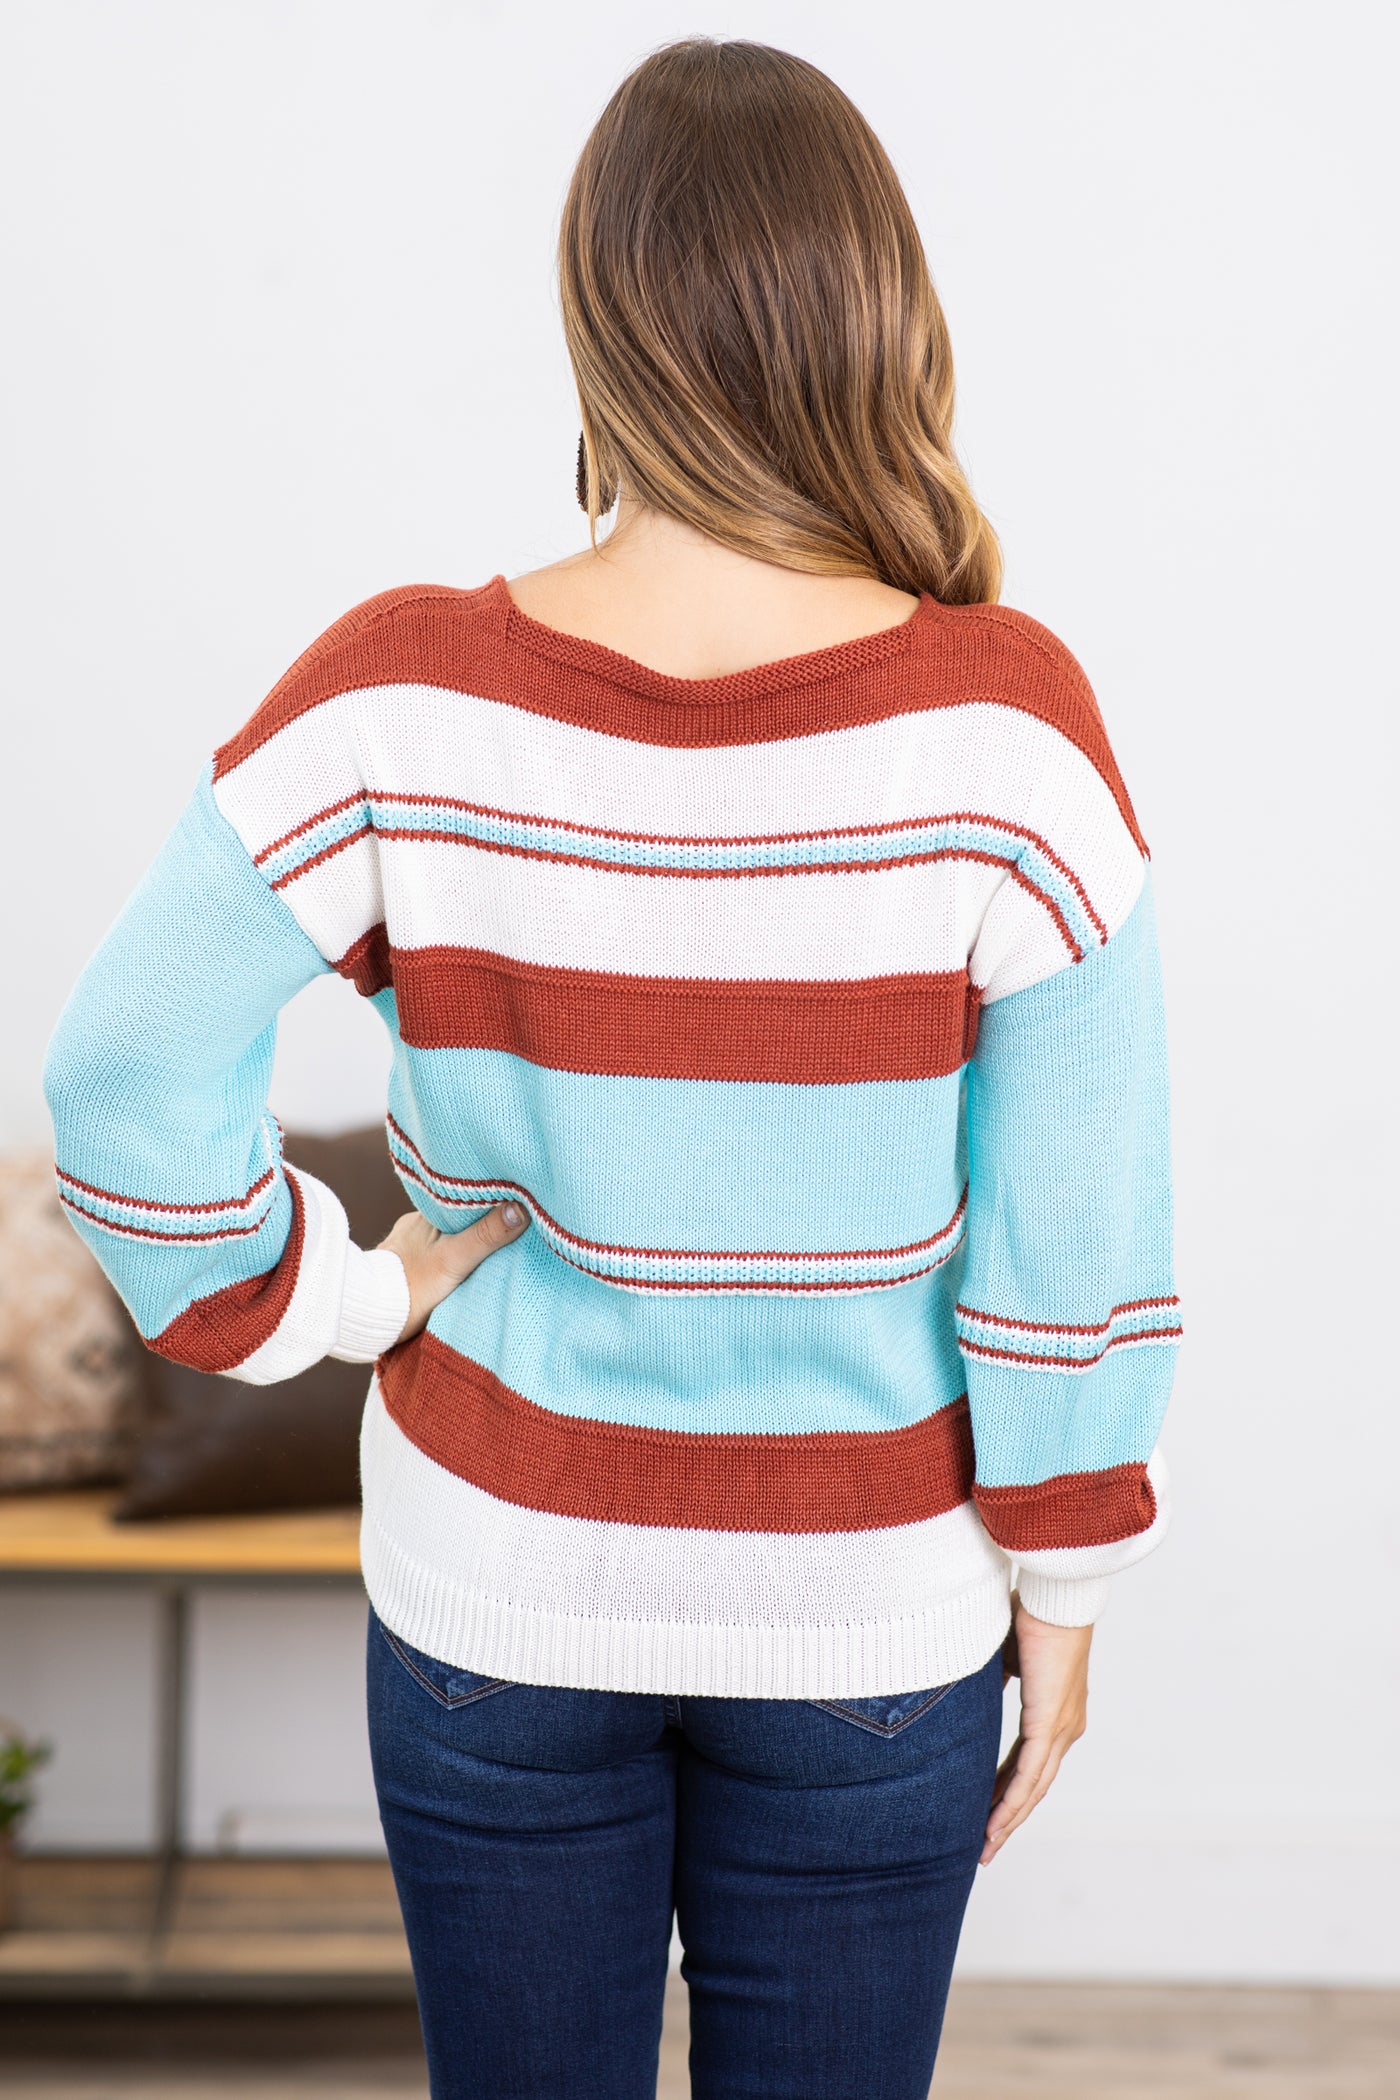 Aqua and Maroon Stripe Sweater